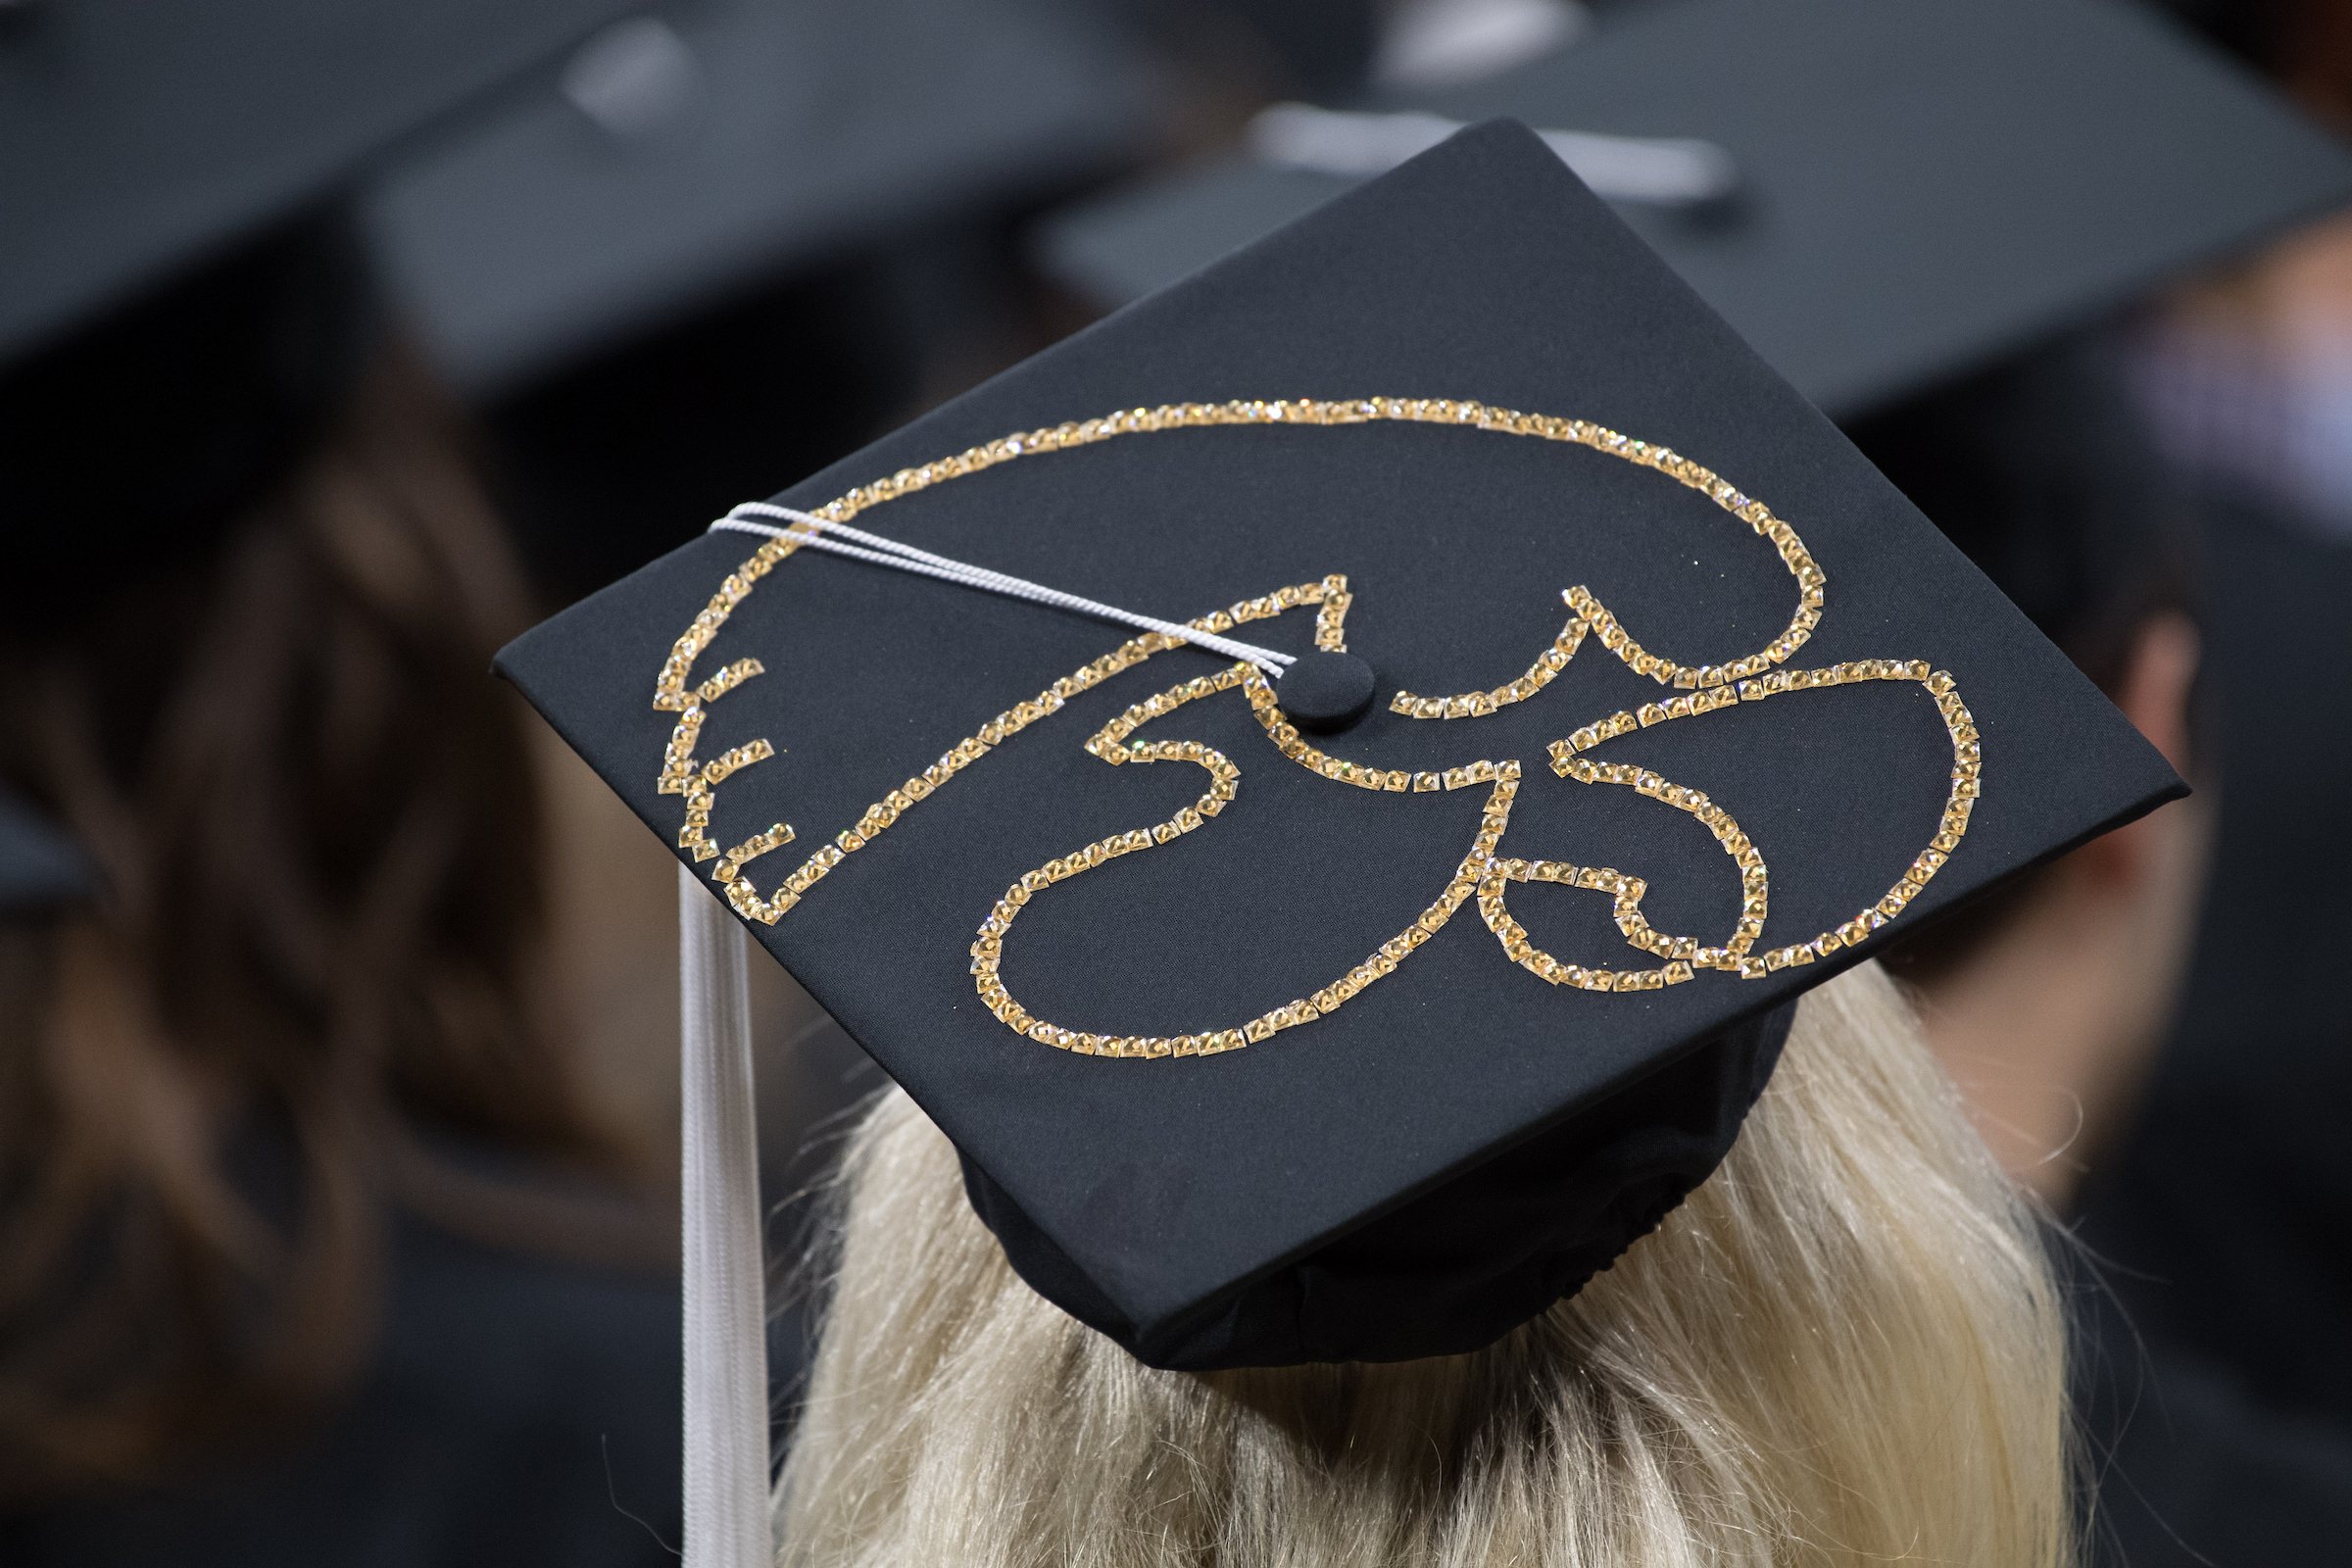 Decorated graduation cap with TigerHawk logo